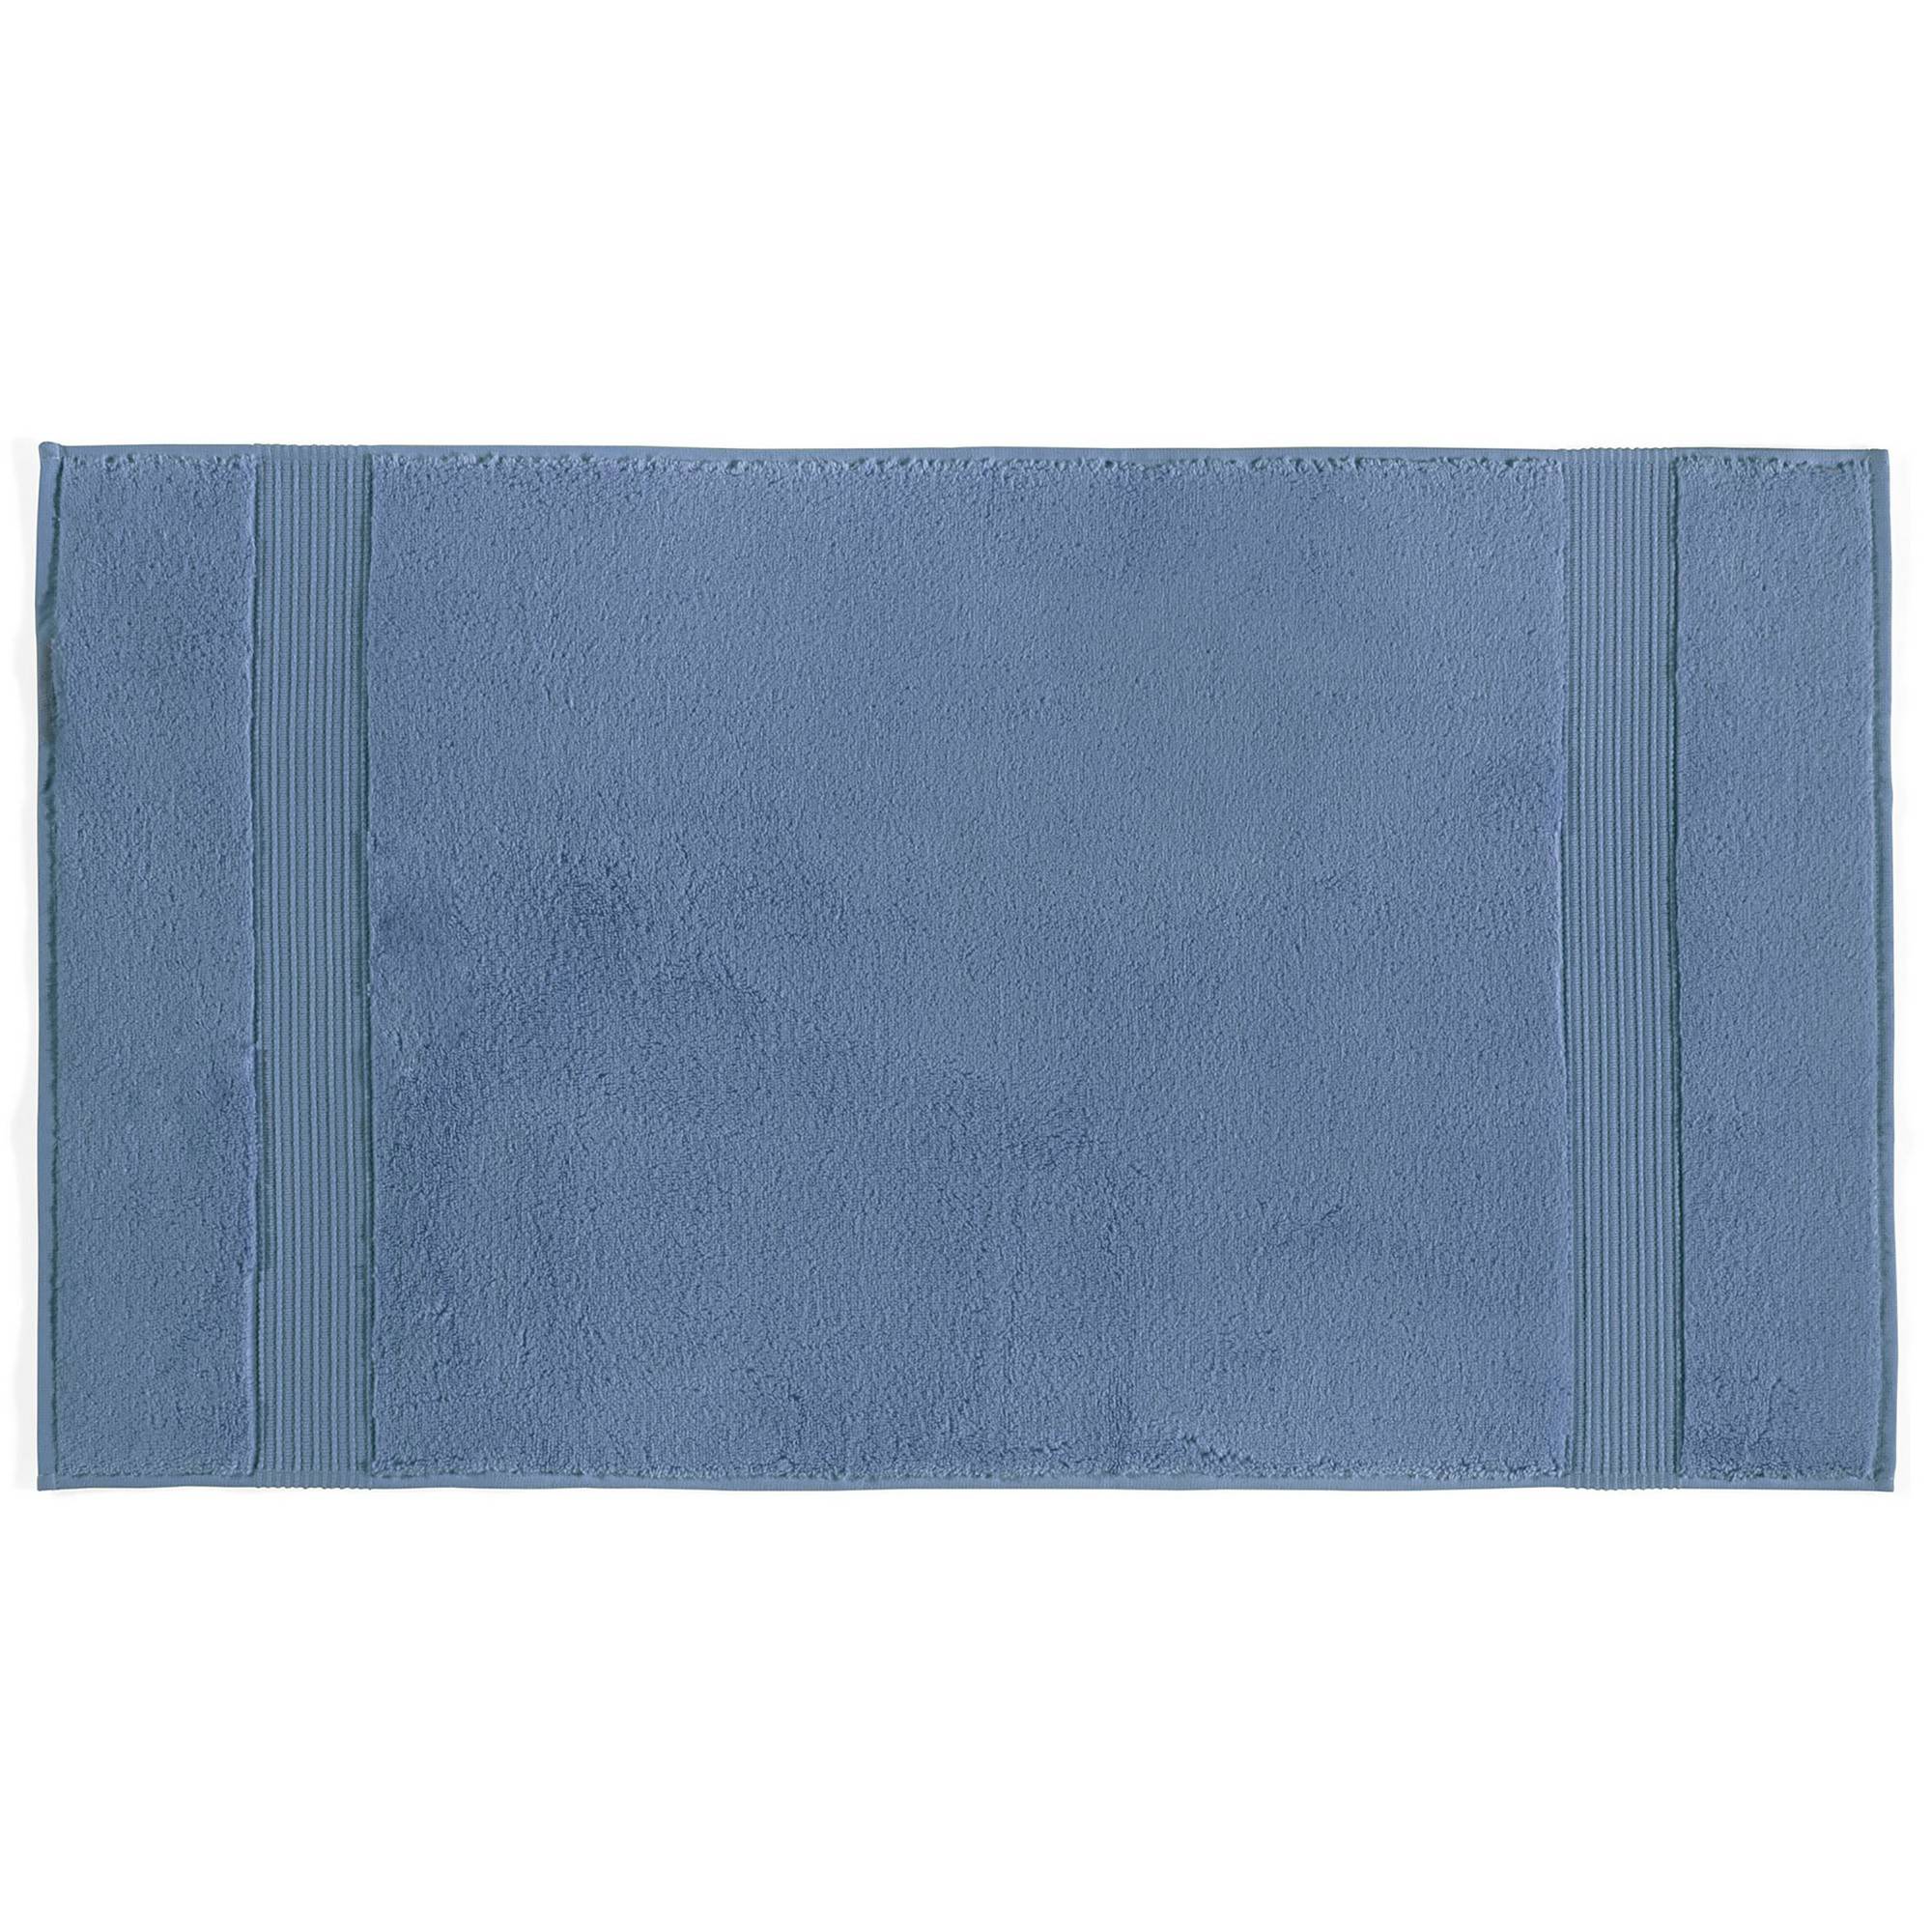 Handdoek 50 x 90 cm Sicco 100% katoen Celeste Blauw